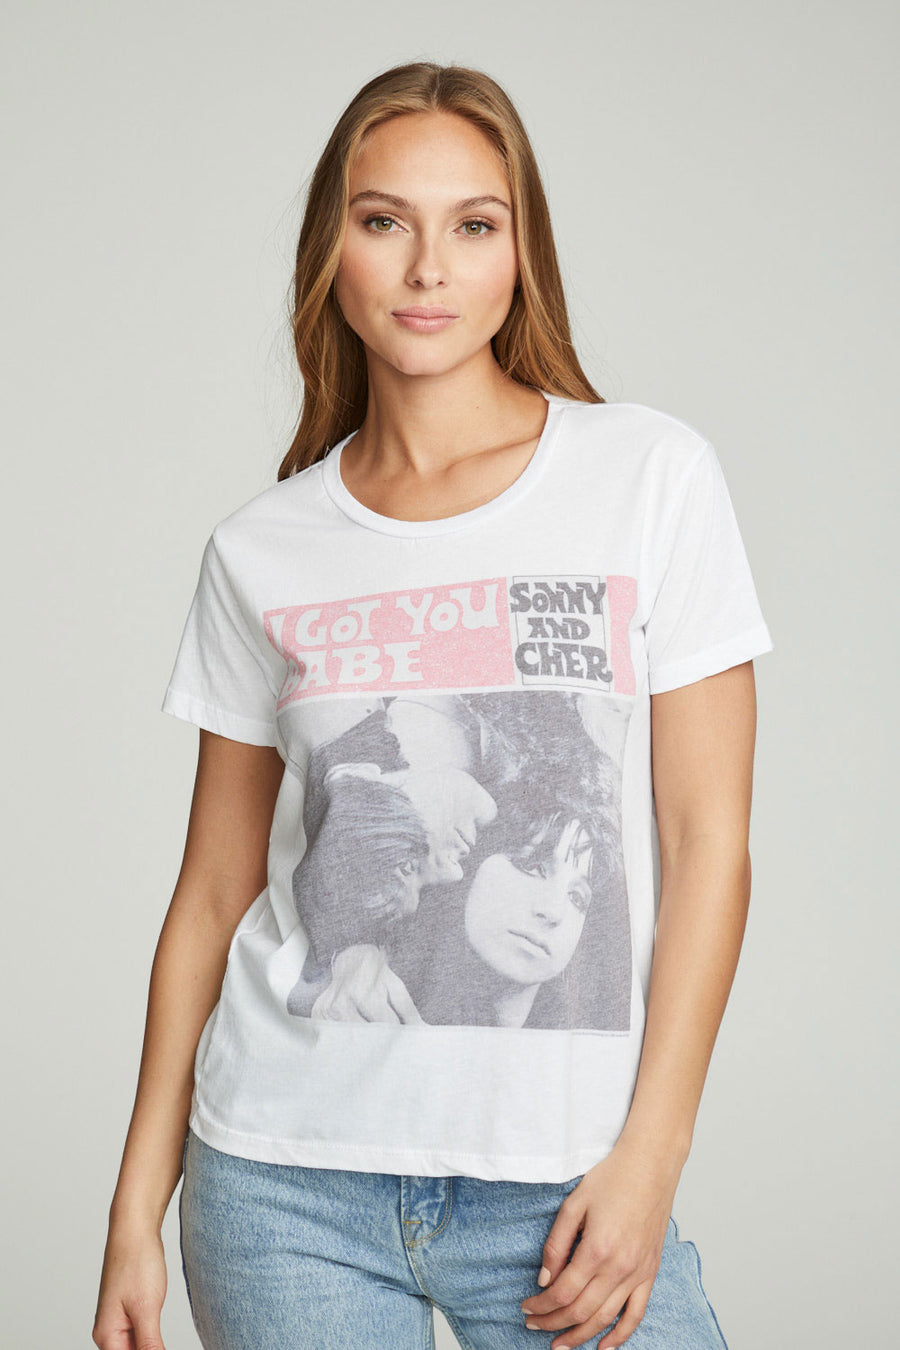 Sonny & Cher - I Got You Babe WOMENS chaserbrand